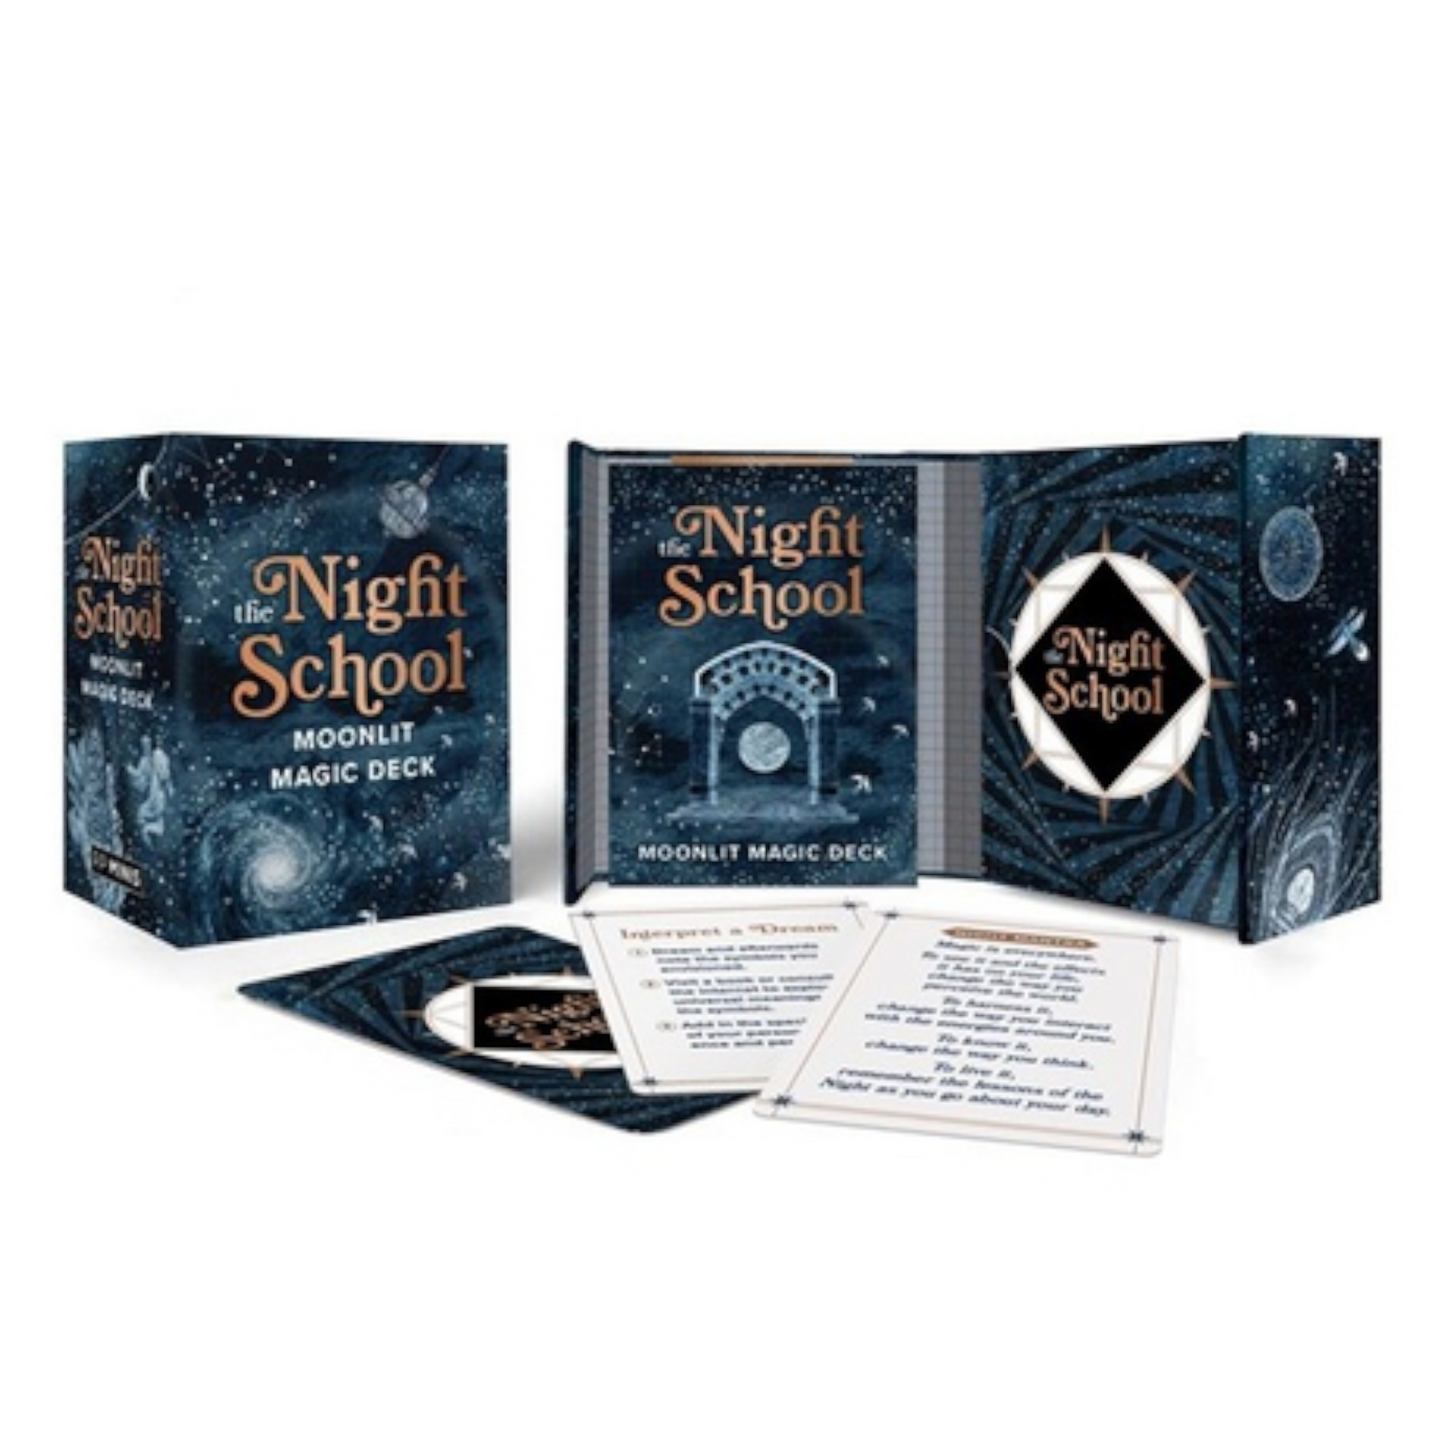 The Night School: Moonlit Magic Deck